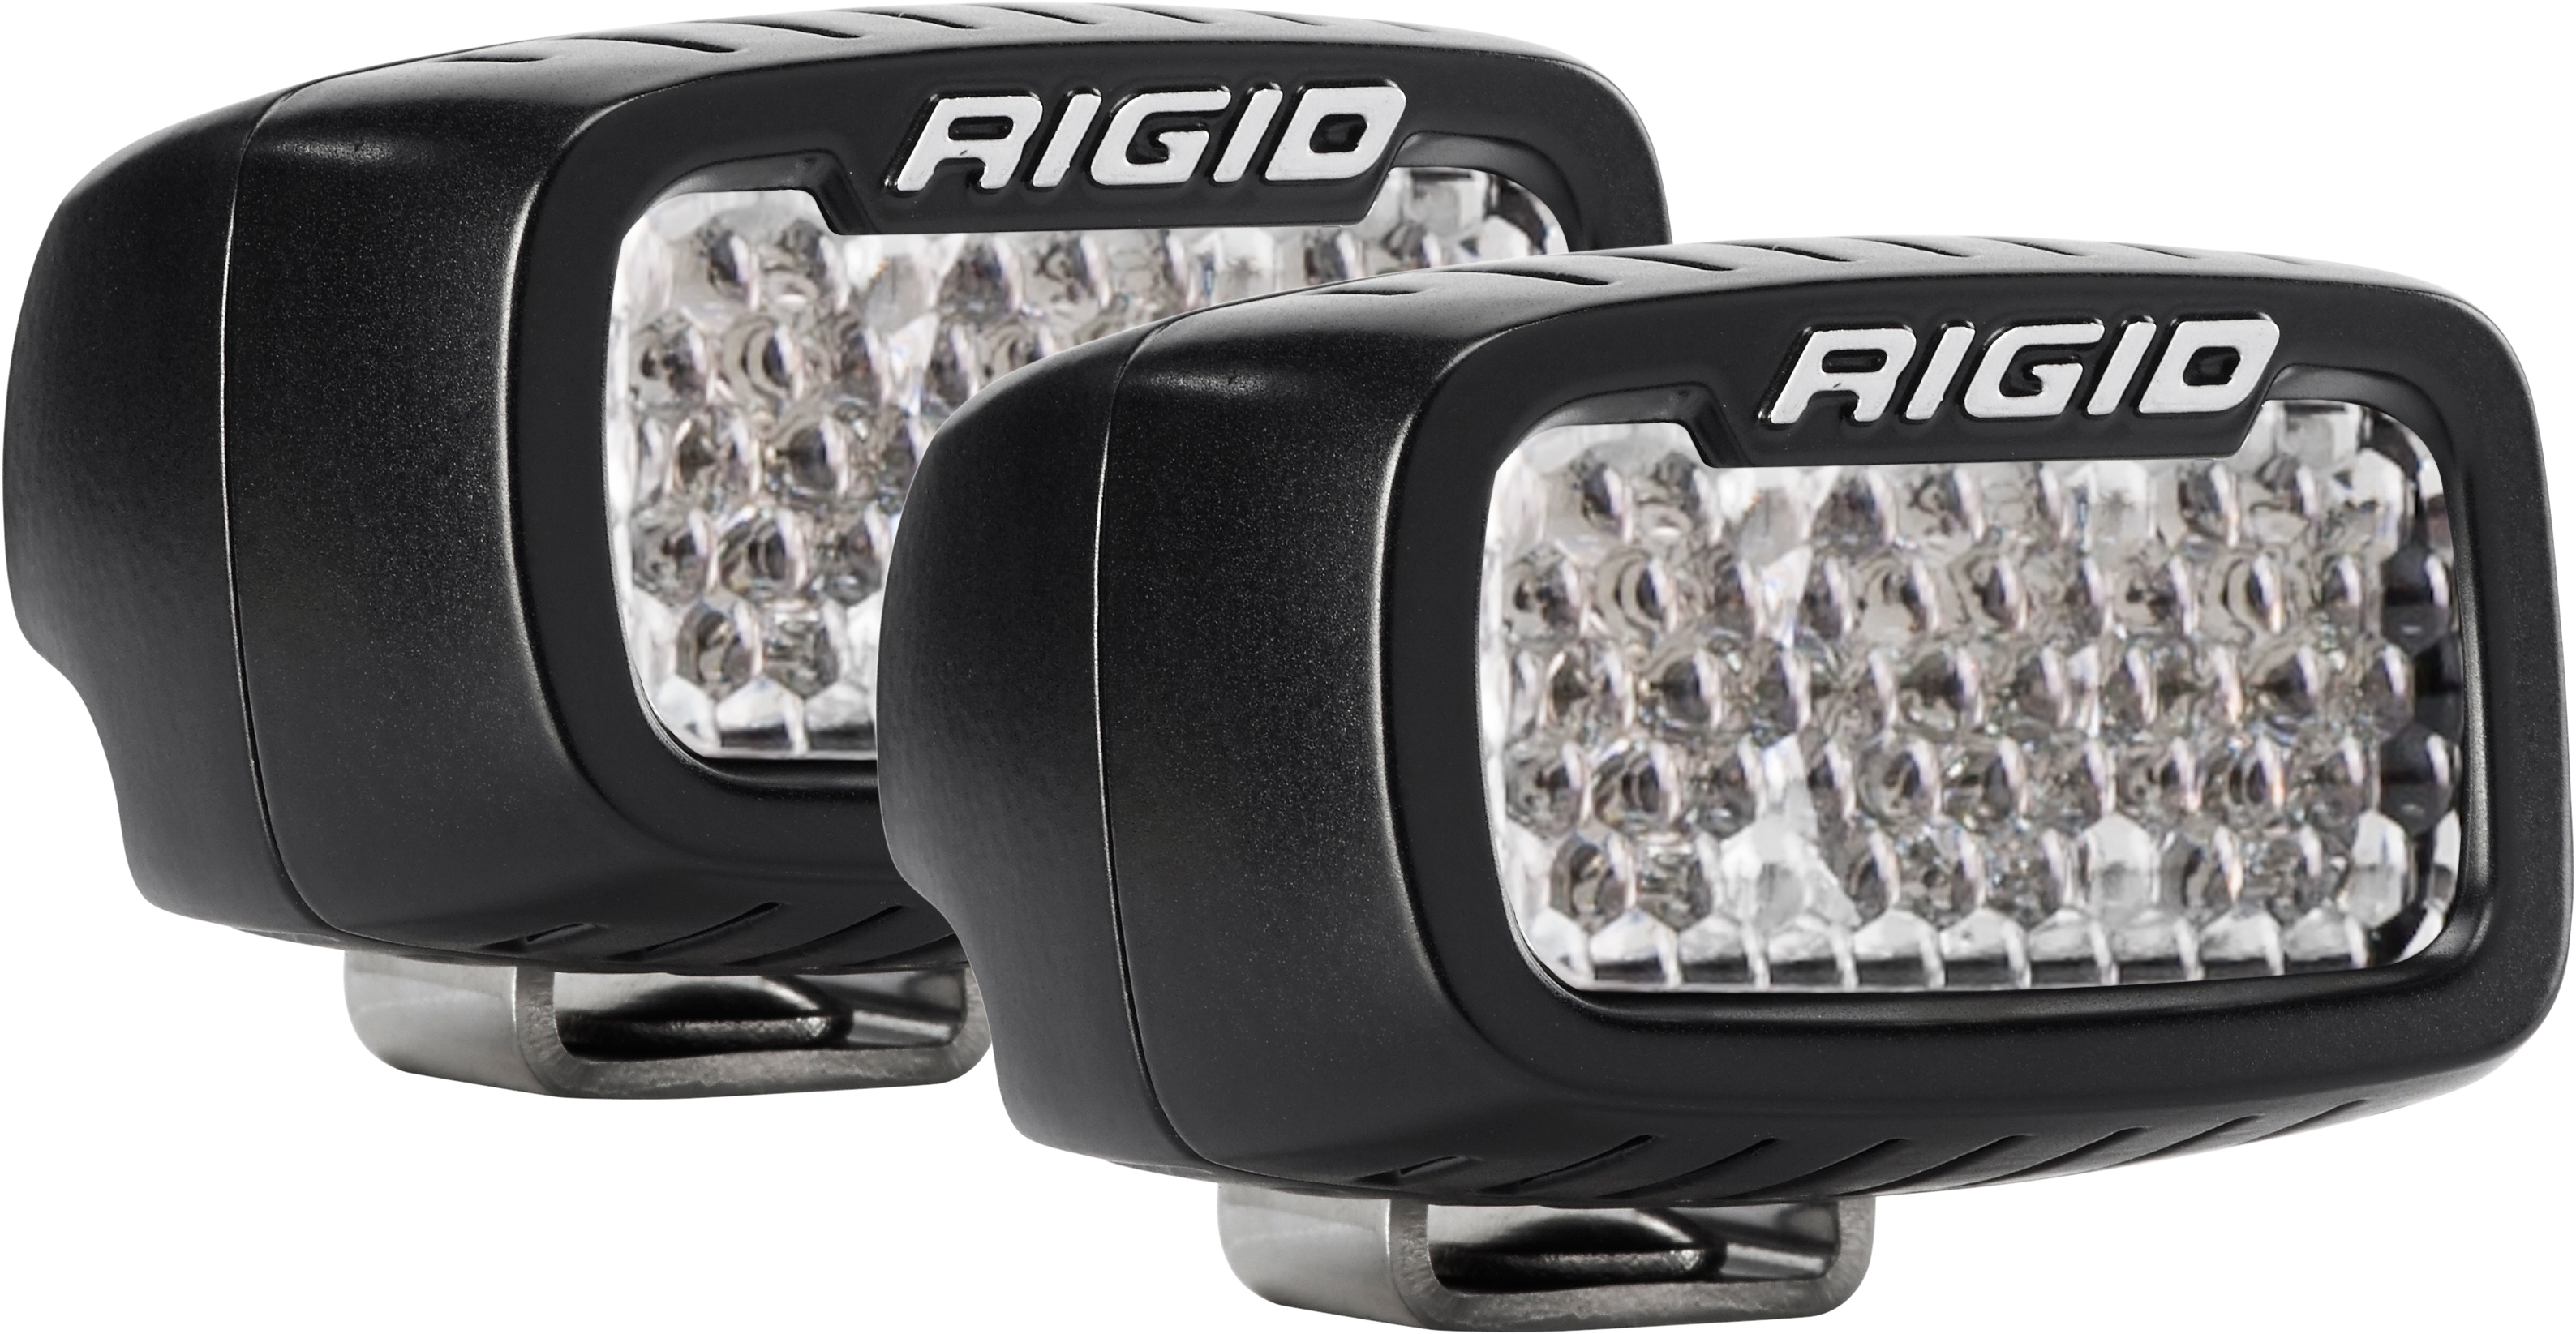 Rigid - Sr-m Pro Diffused Backup Kit - 980003